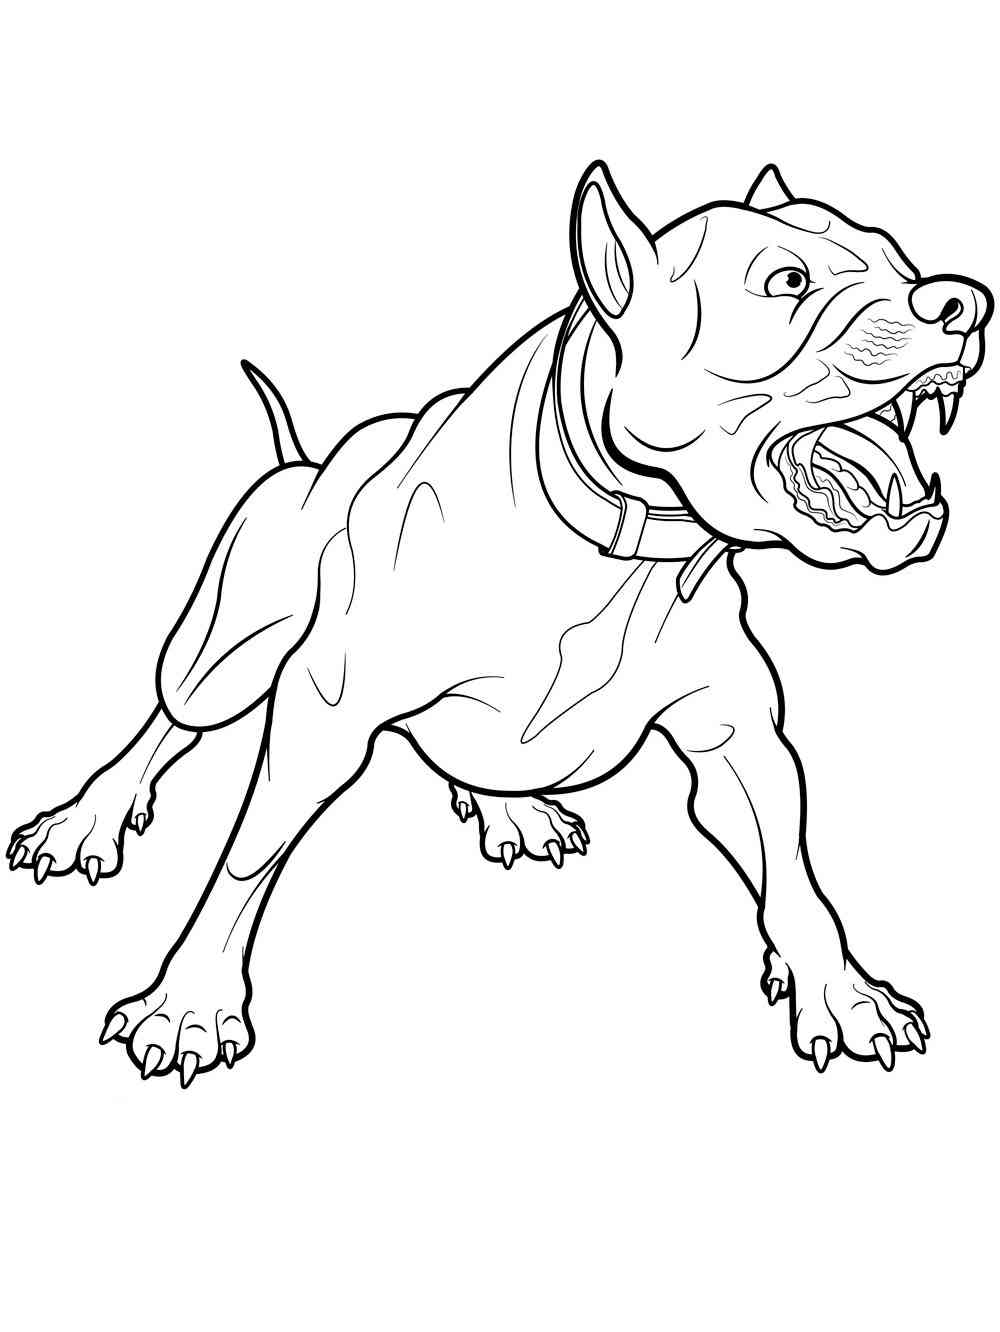 Angry Pitbull coloring page